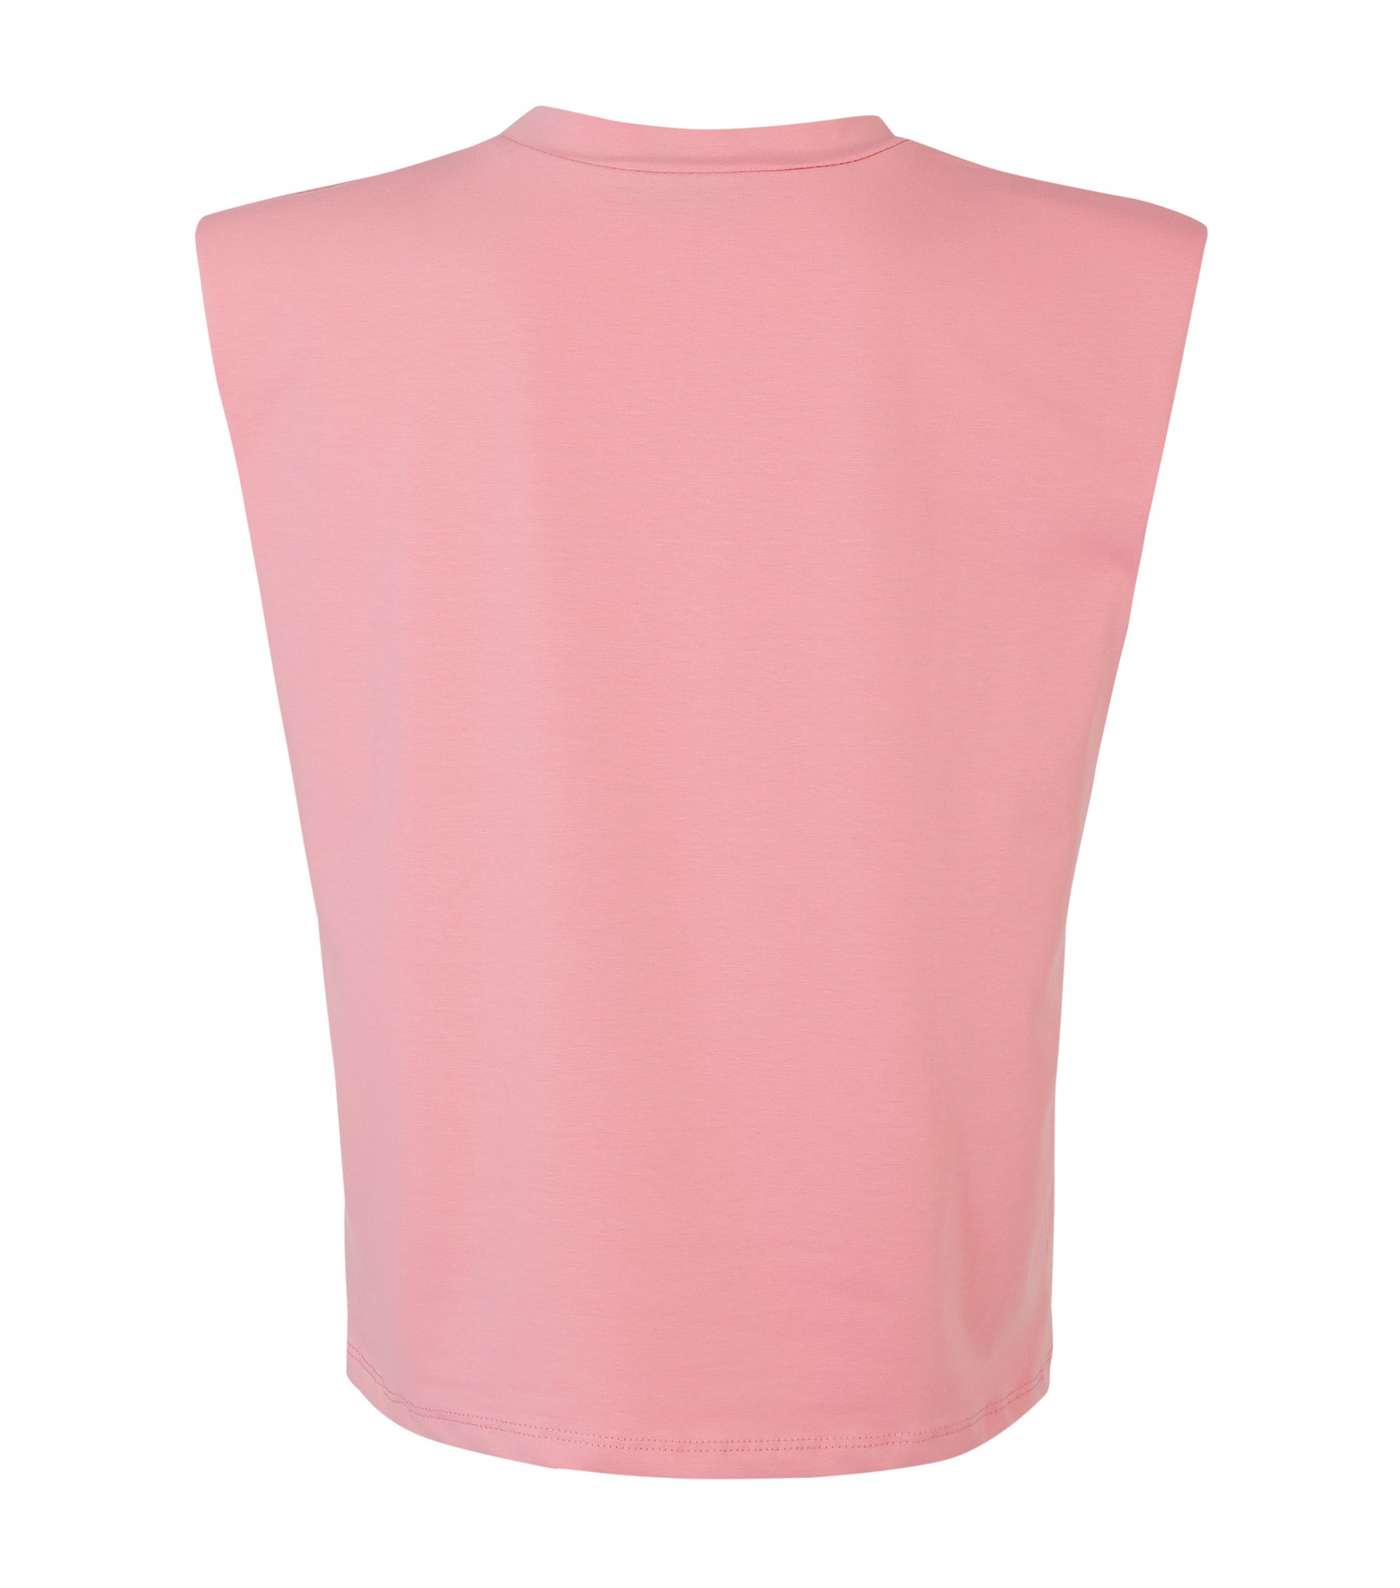 Cameo Rose Pink Shoulder Pad Sleeveless T-Shirt Image 2